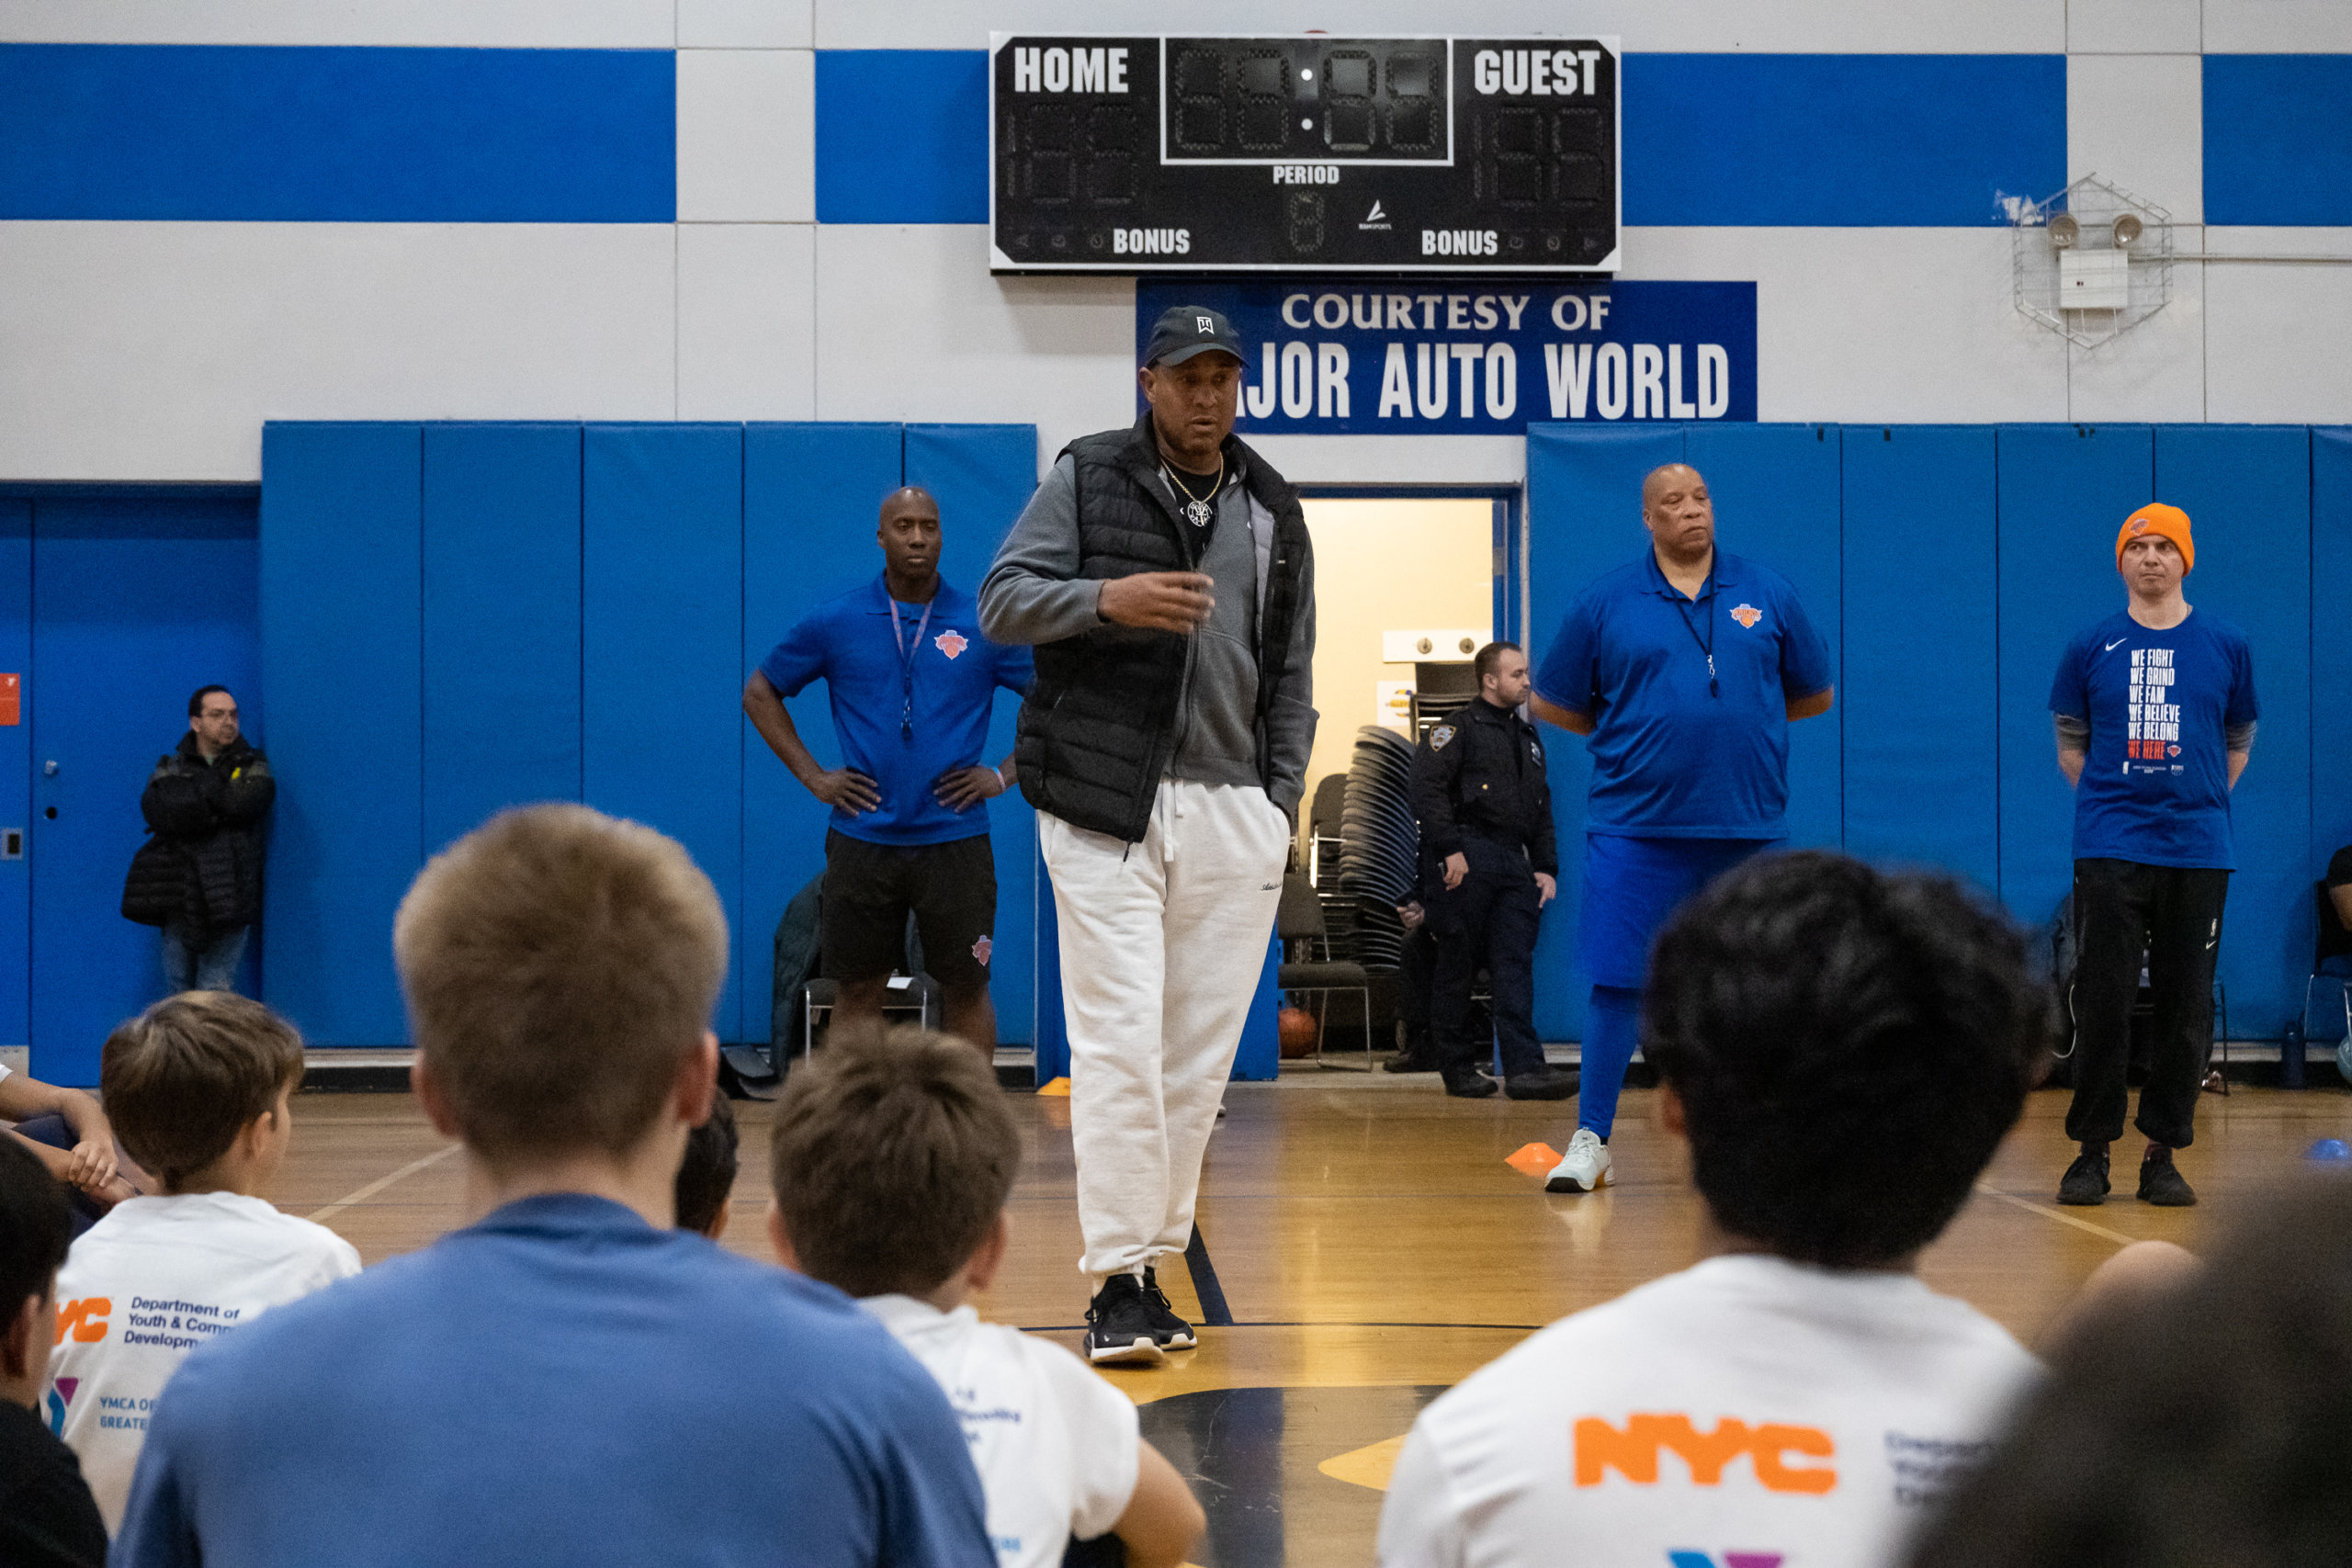 Jr. Knicks Basketball Clinics and Leagues : NYC Parks